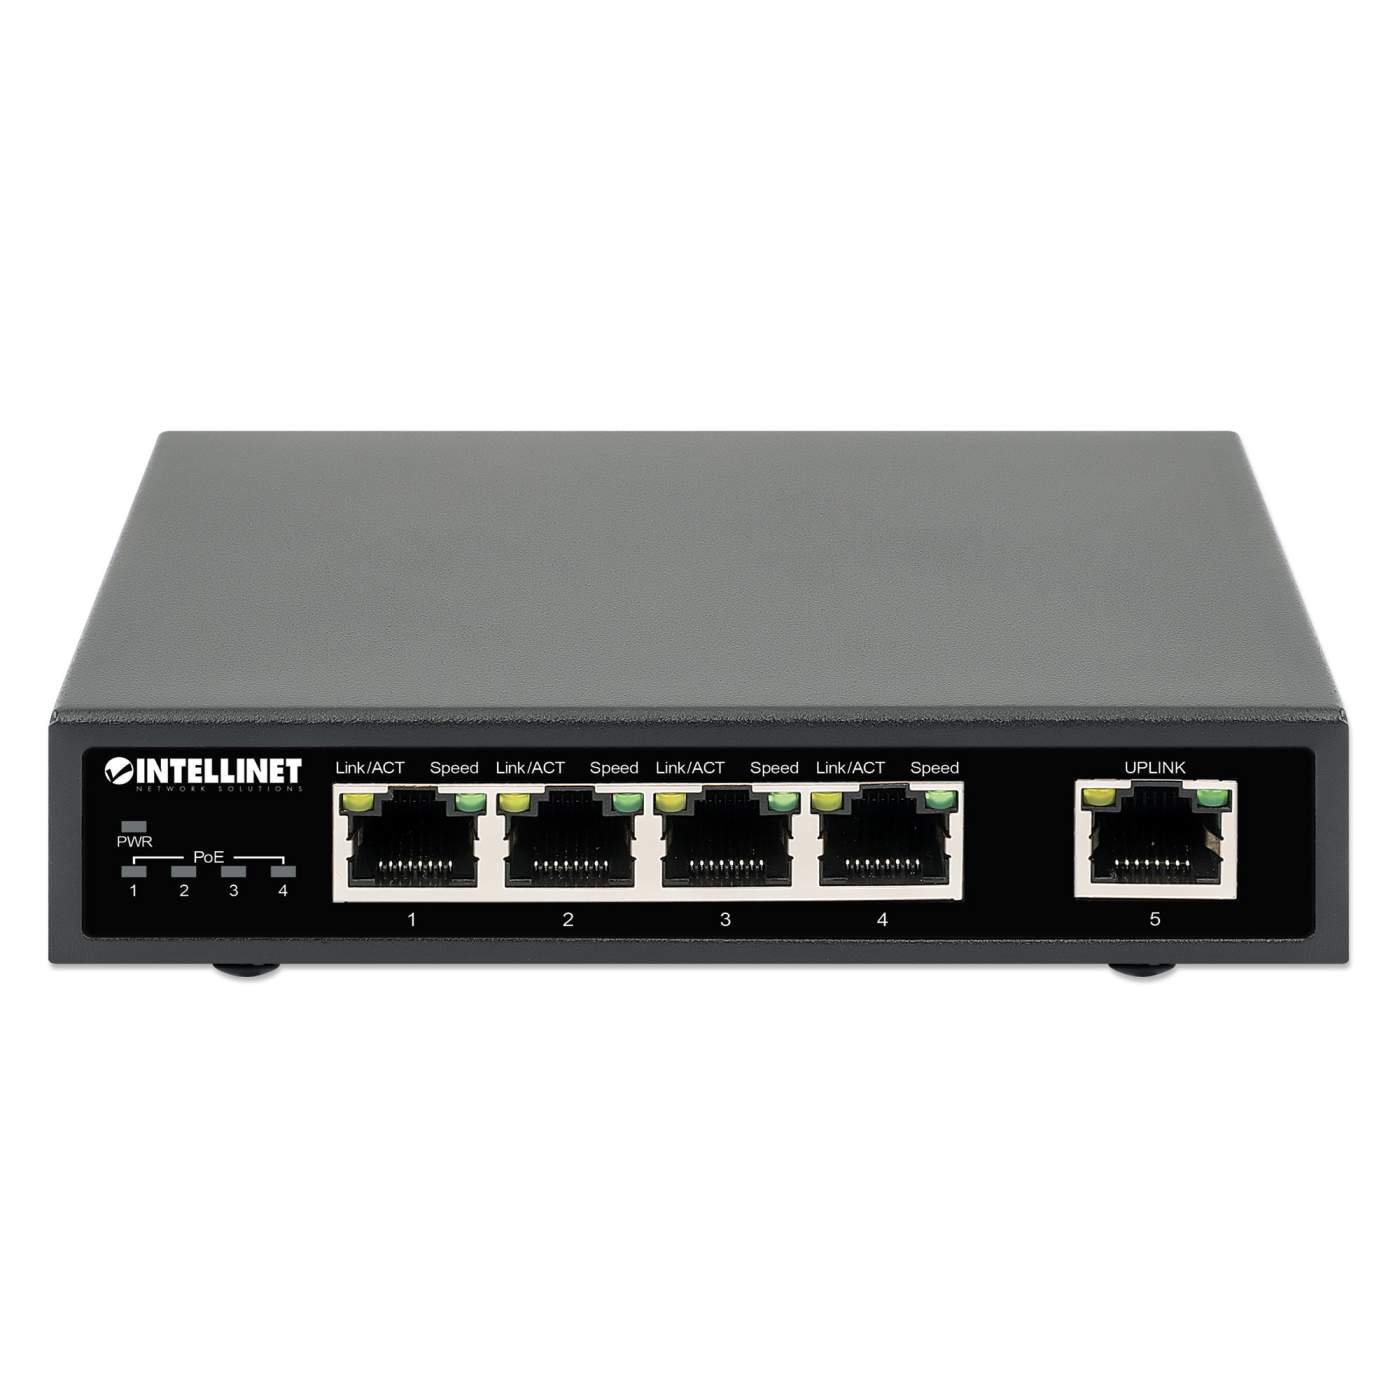 Intellinet 5-Port Gigabit Ethernet PoE+ Switch (561839